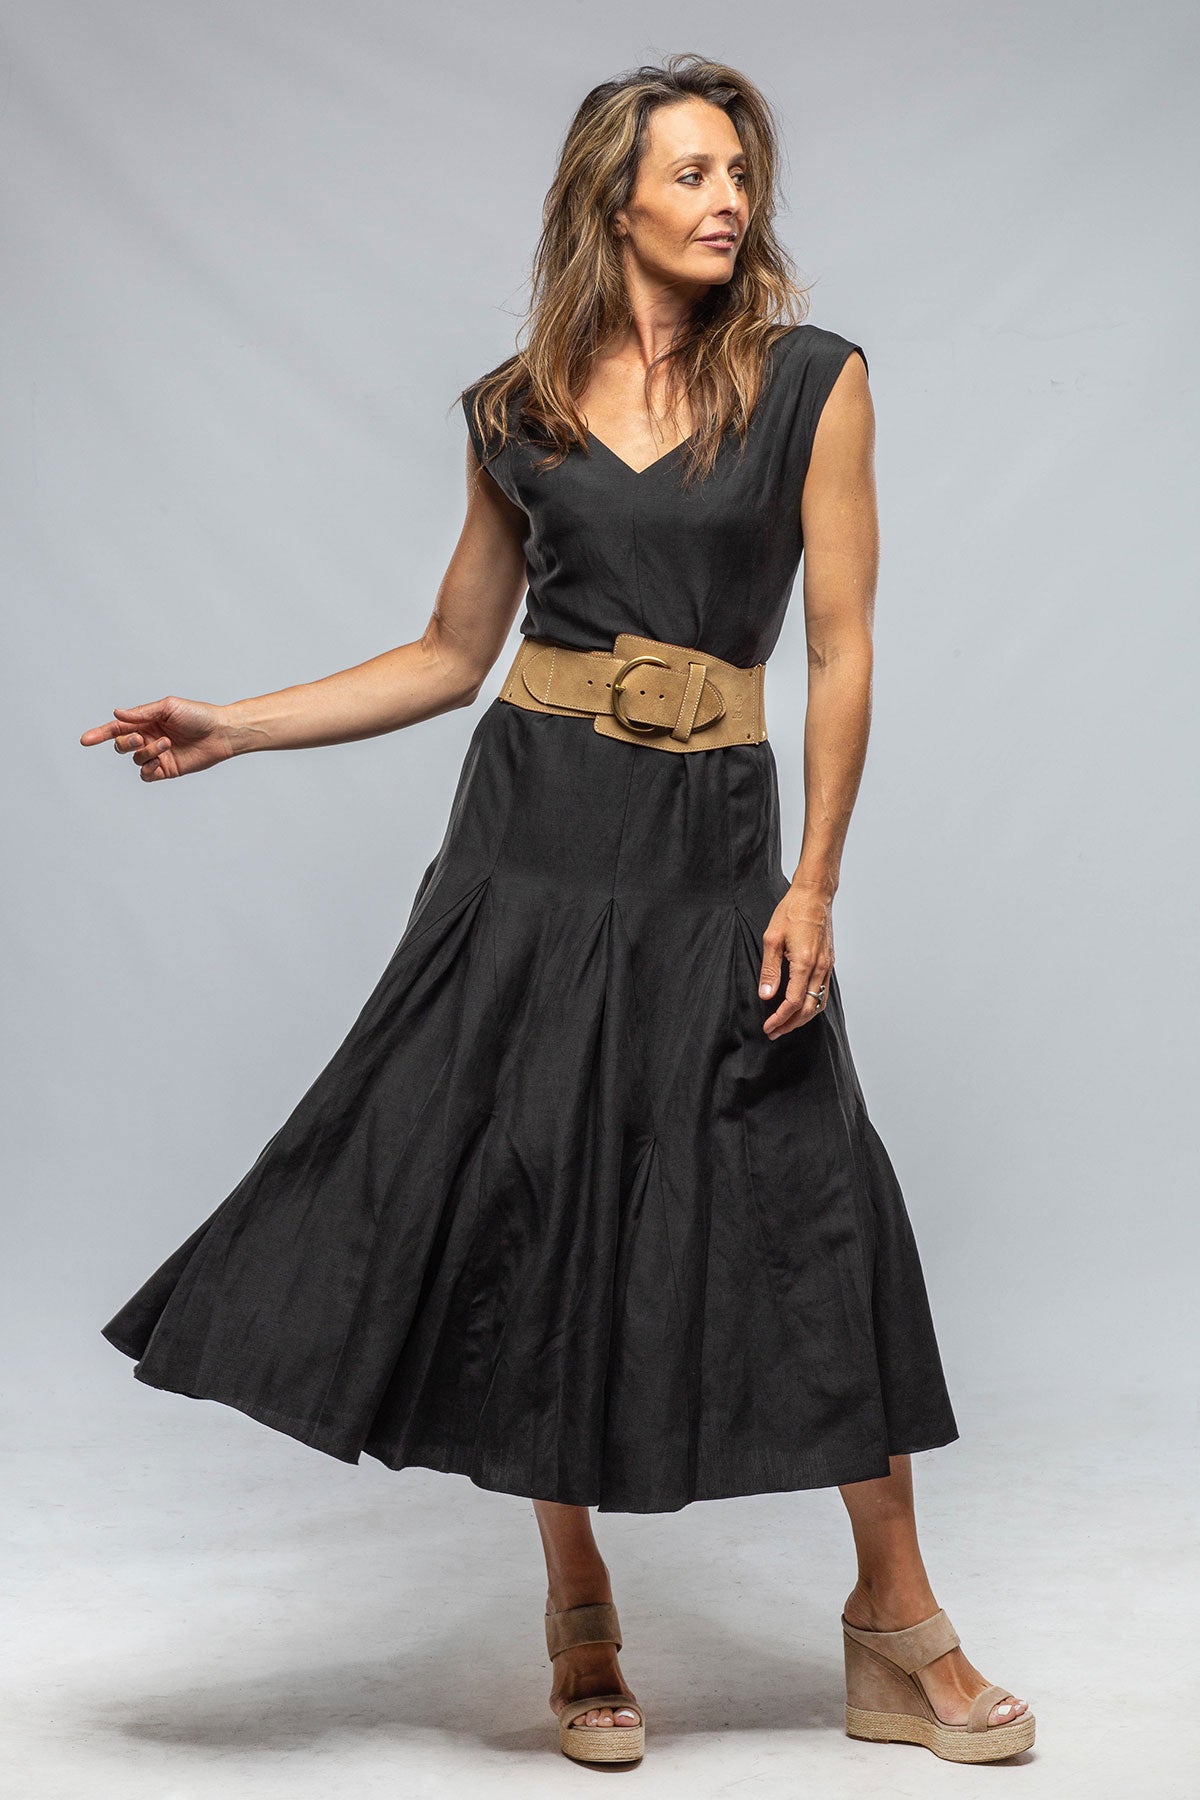 Dress under 500 on Amazon | Women's knee length dresses, T dress, Dresses